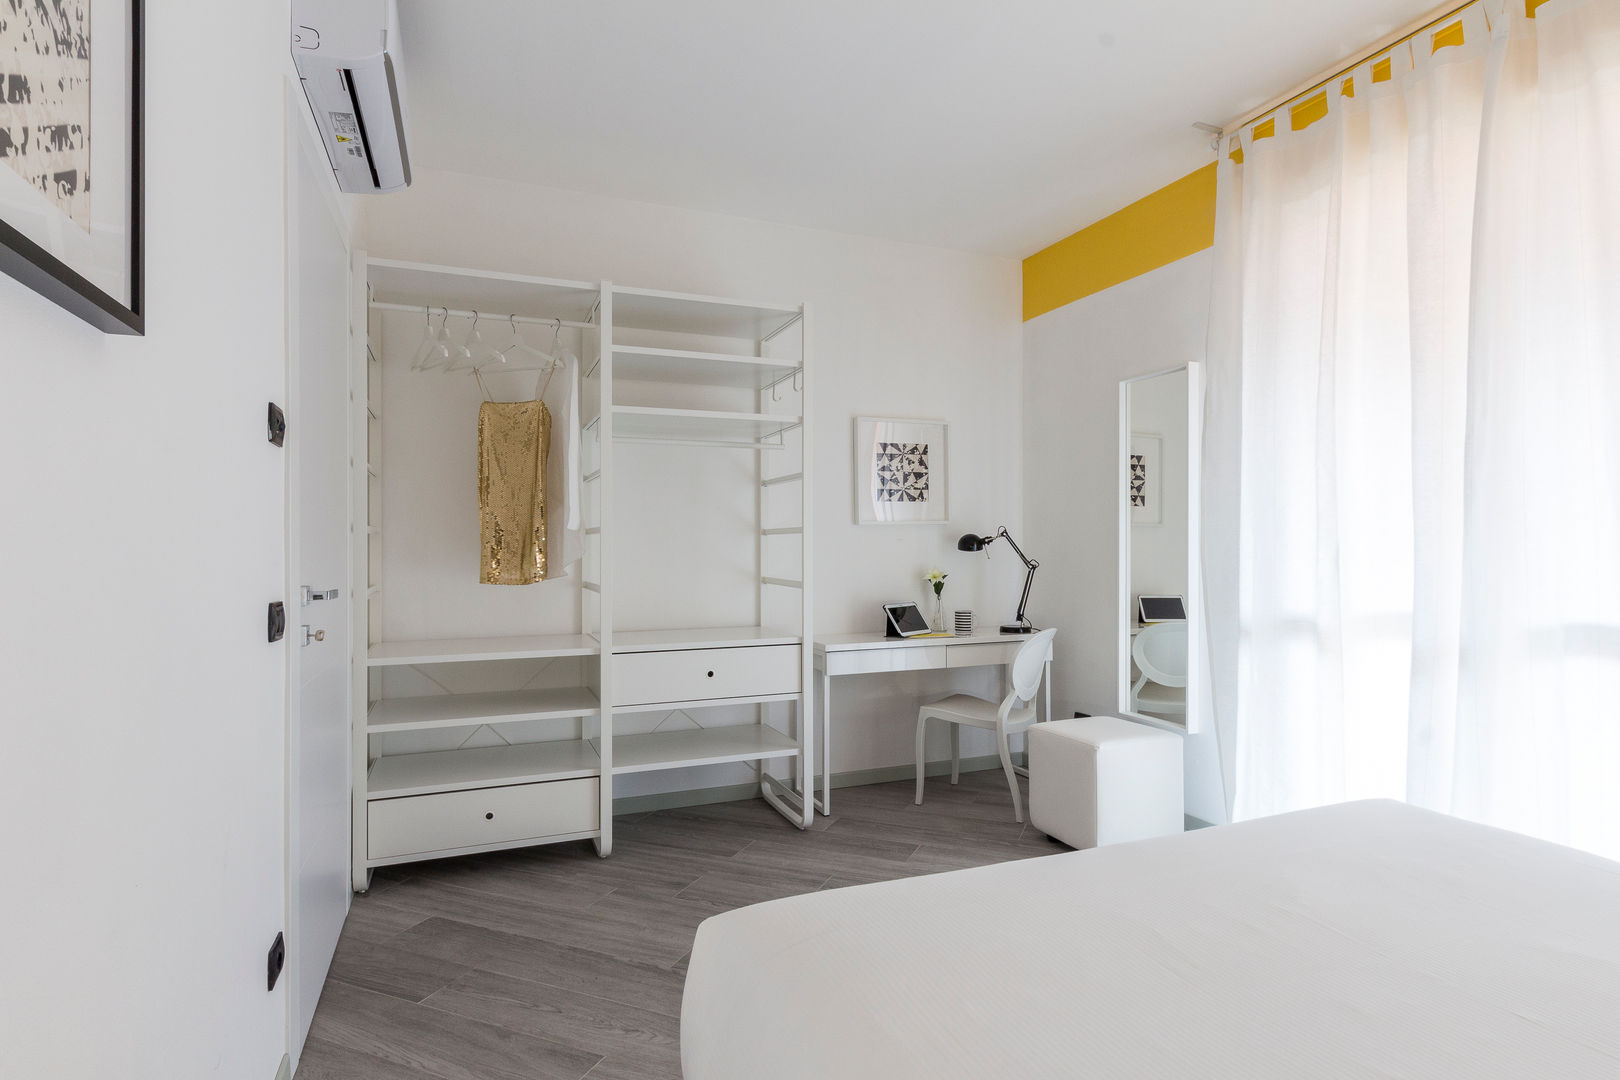 casa vacanza Firenze - RESTYLING + HOME STAGING TURISTICO 2019, Chiara Claudi - FIRENZE HOME DESIGN Chiara Claudi - FIRENZE HOME DESIGN Small bedroom